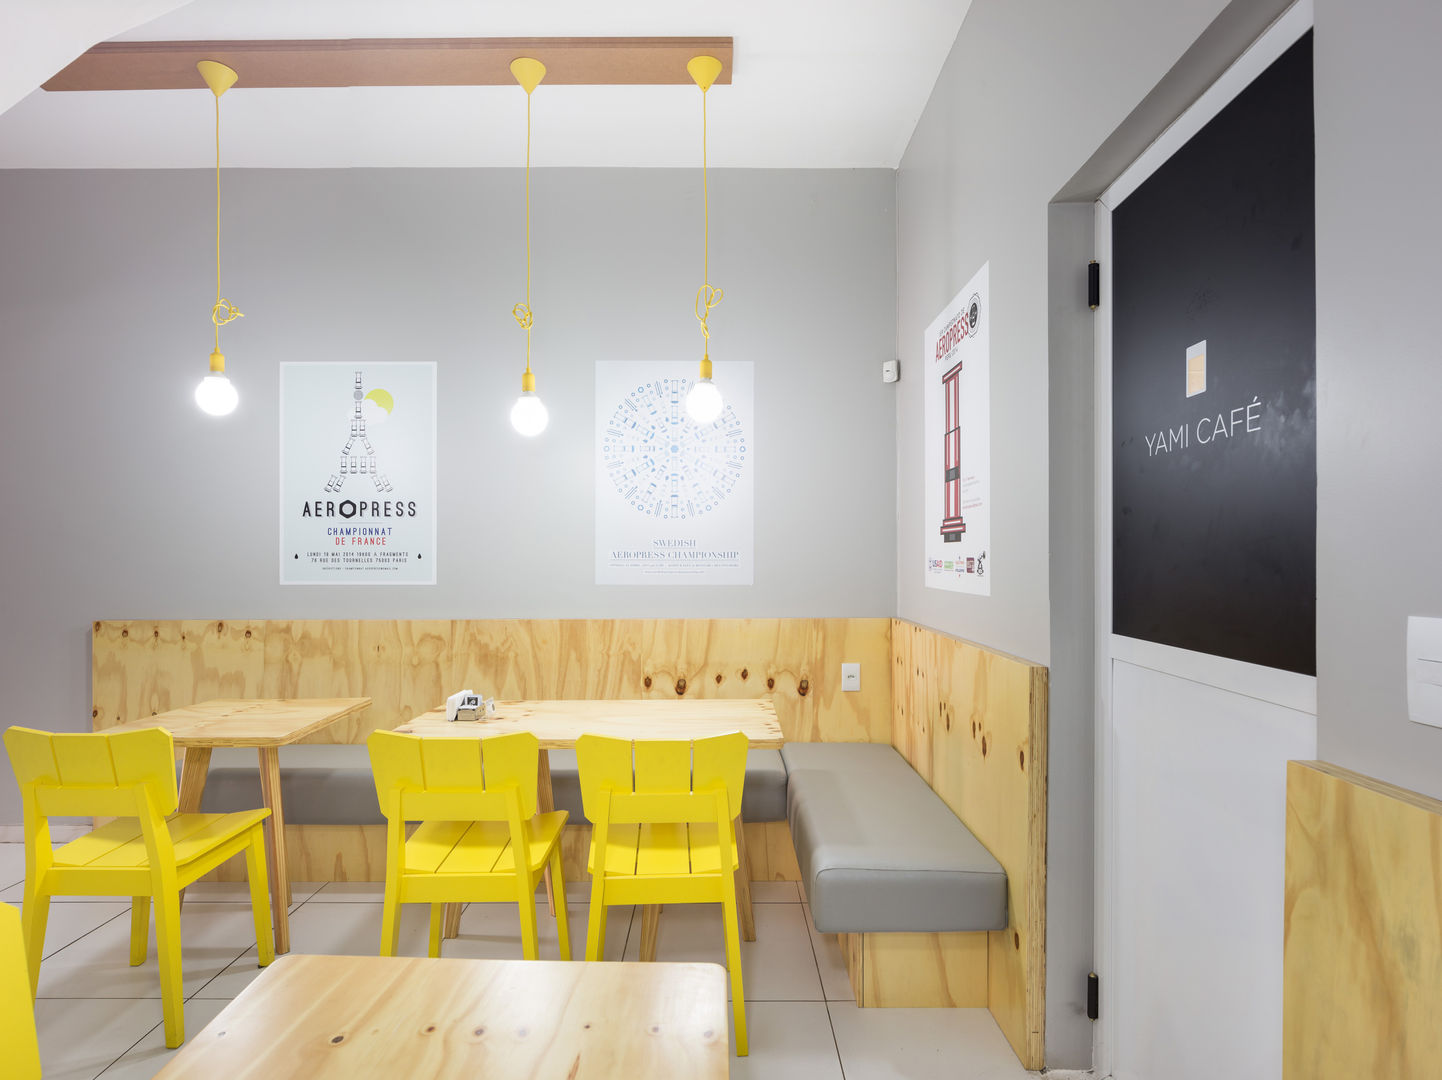 Restaurante - 2014 - Yami Café, Kali Arquitetura Kali Arquitetura 商業空間 レストラン